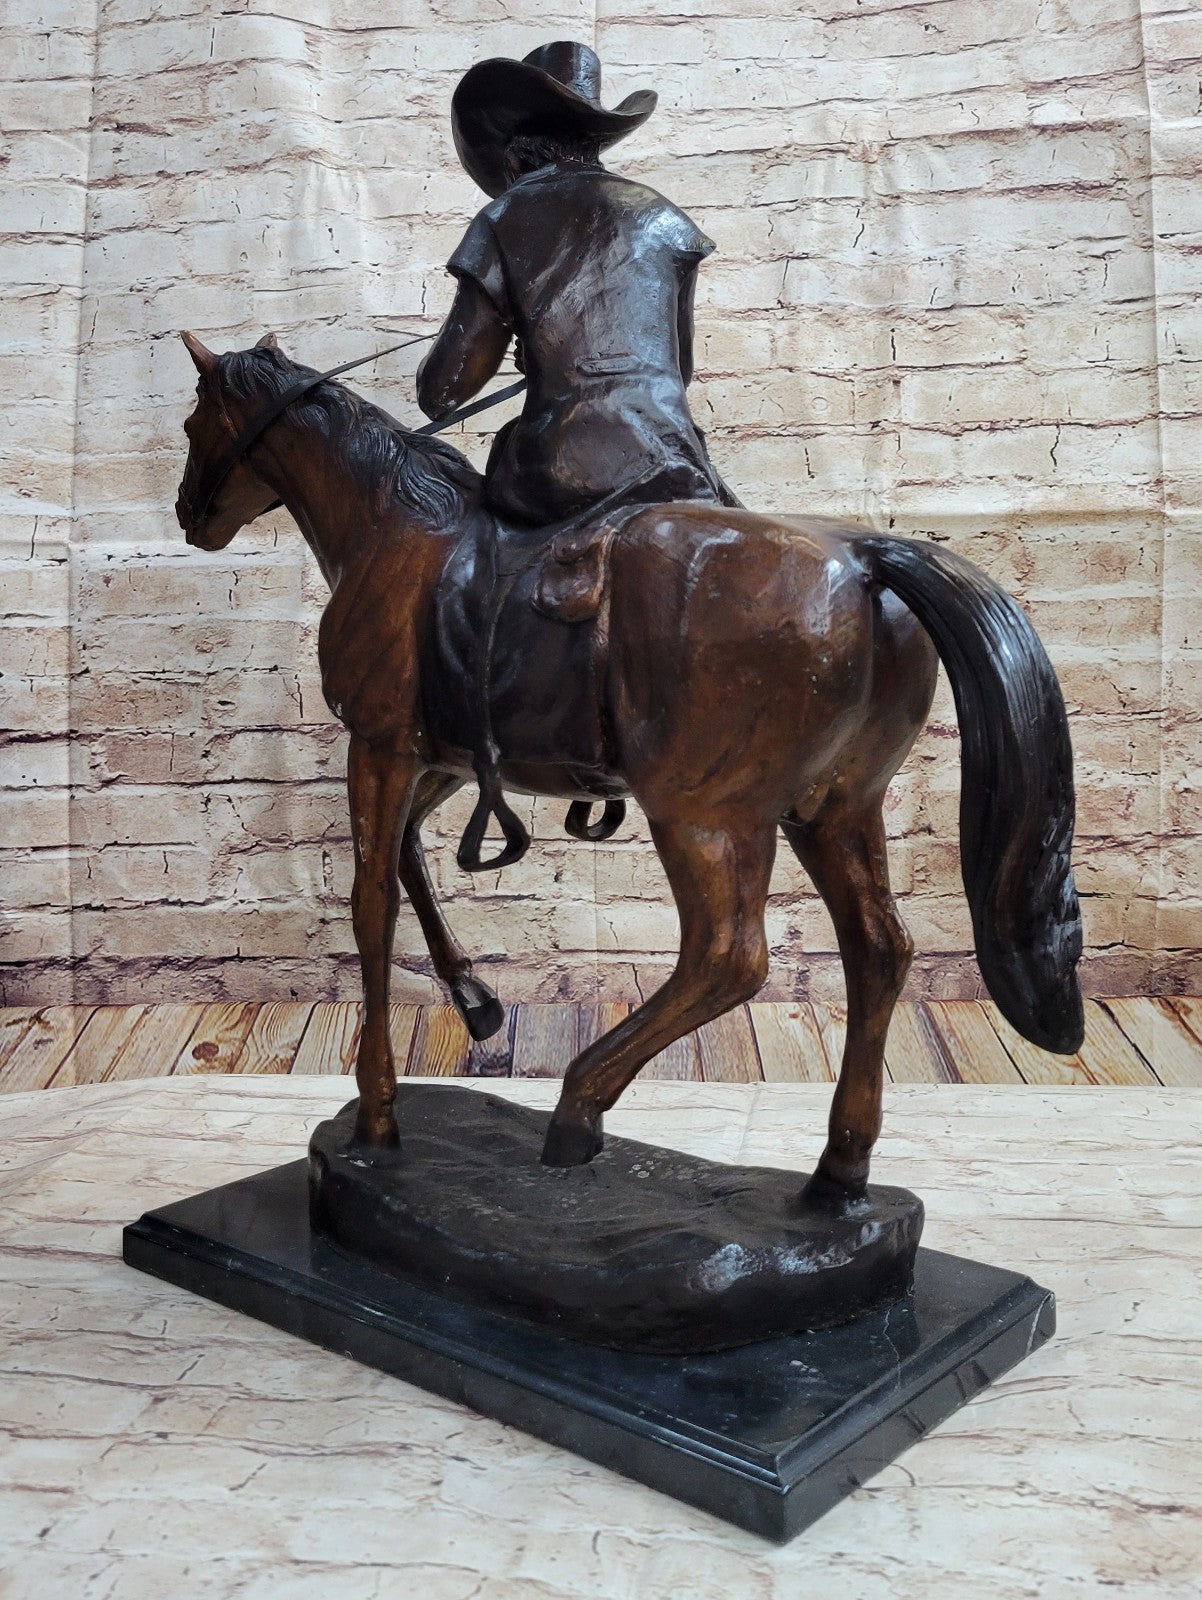 Handcrafted bronze sculpture SALE Smoking Horse Cowboy by Remington Artwork